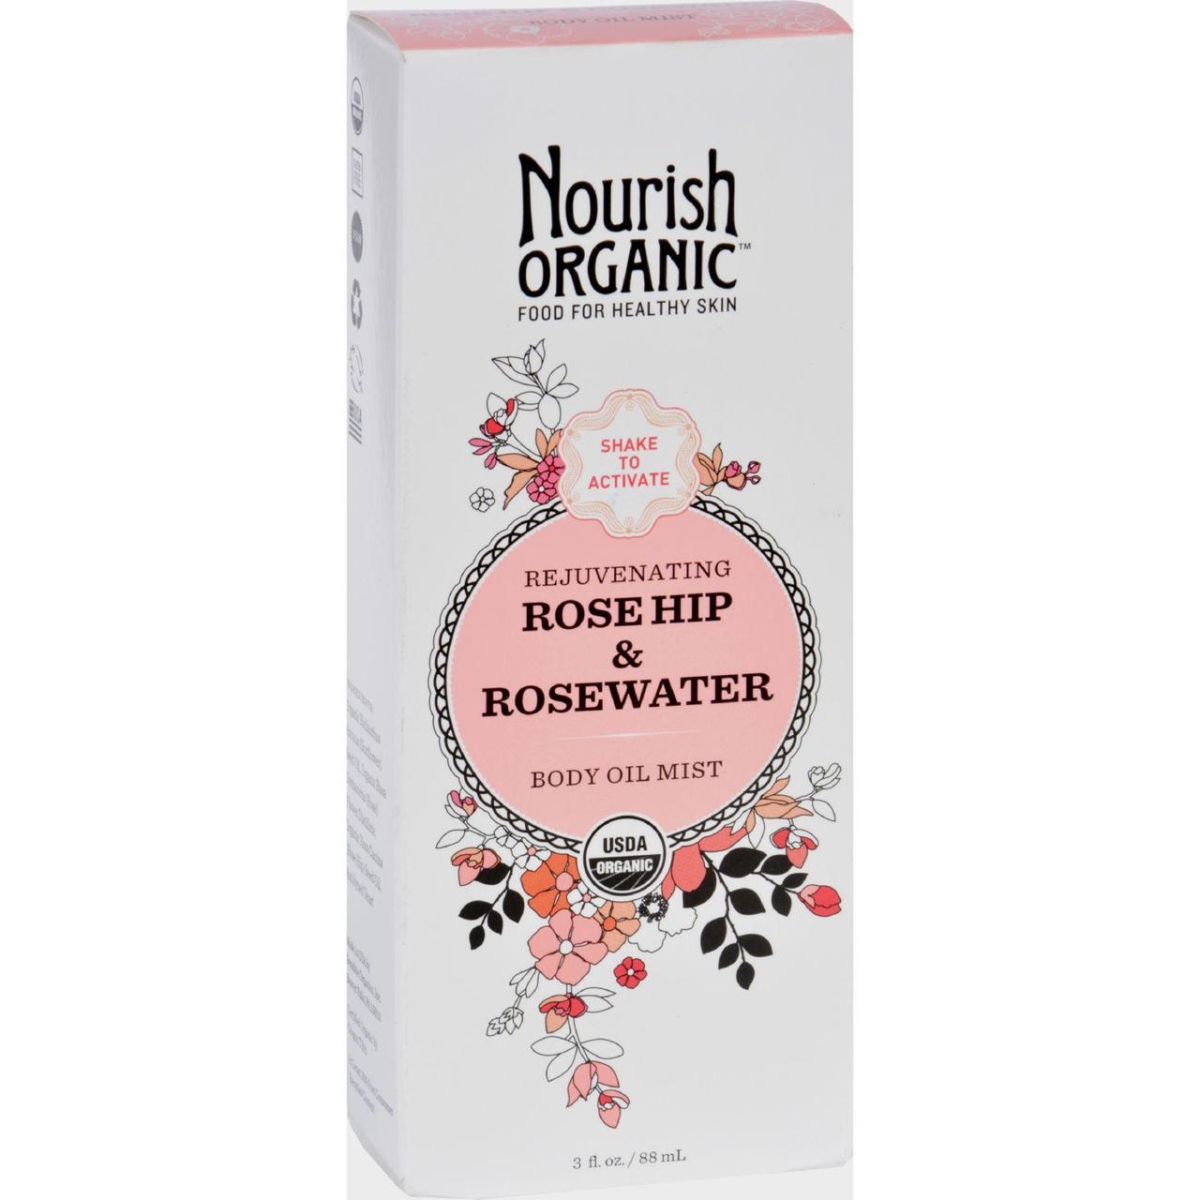 Nourish Hg1601459 3 Oz Organic Body Oil Mist Rejuvenating Rose Hip & Rosewater